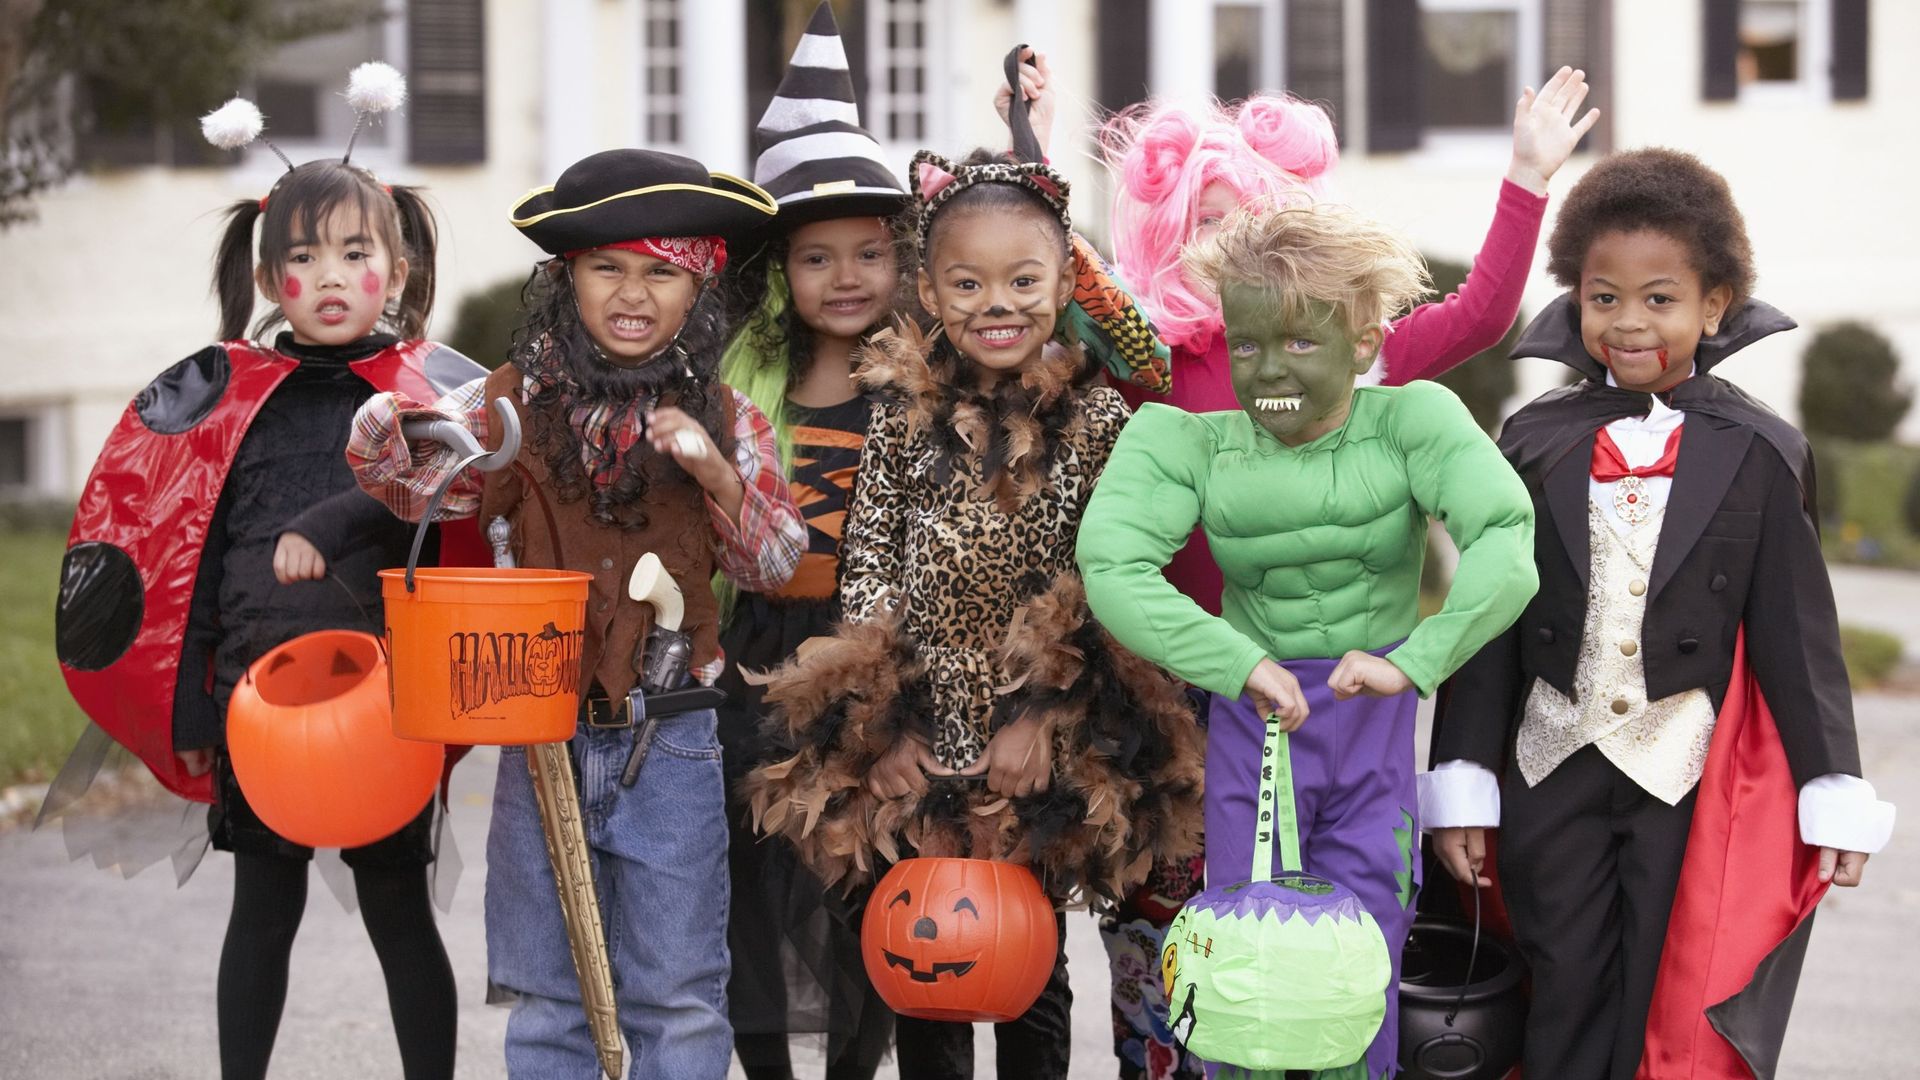 Children (4-7) dressed up for Halloween, group portrait